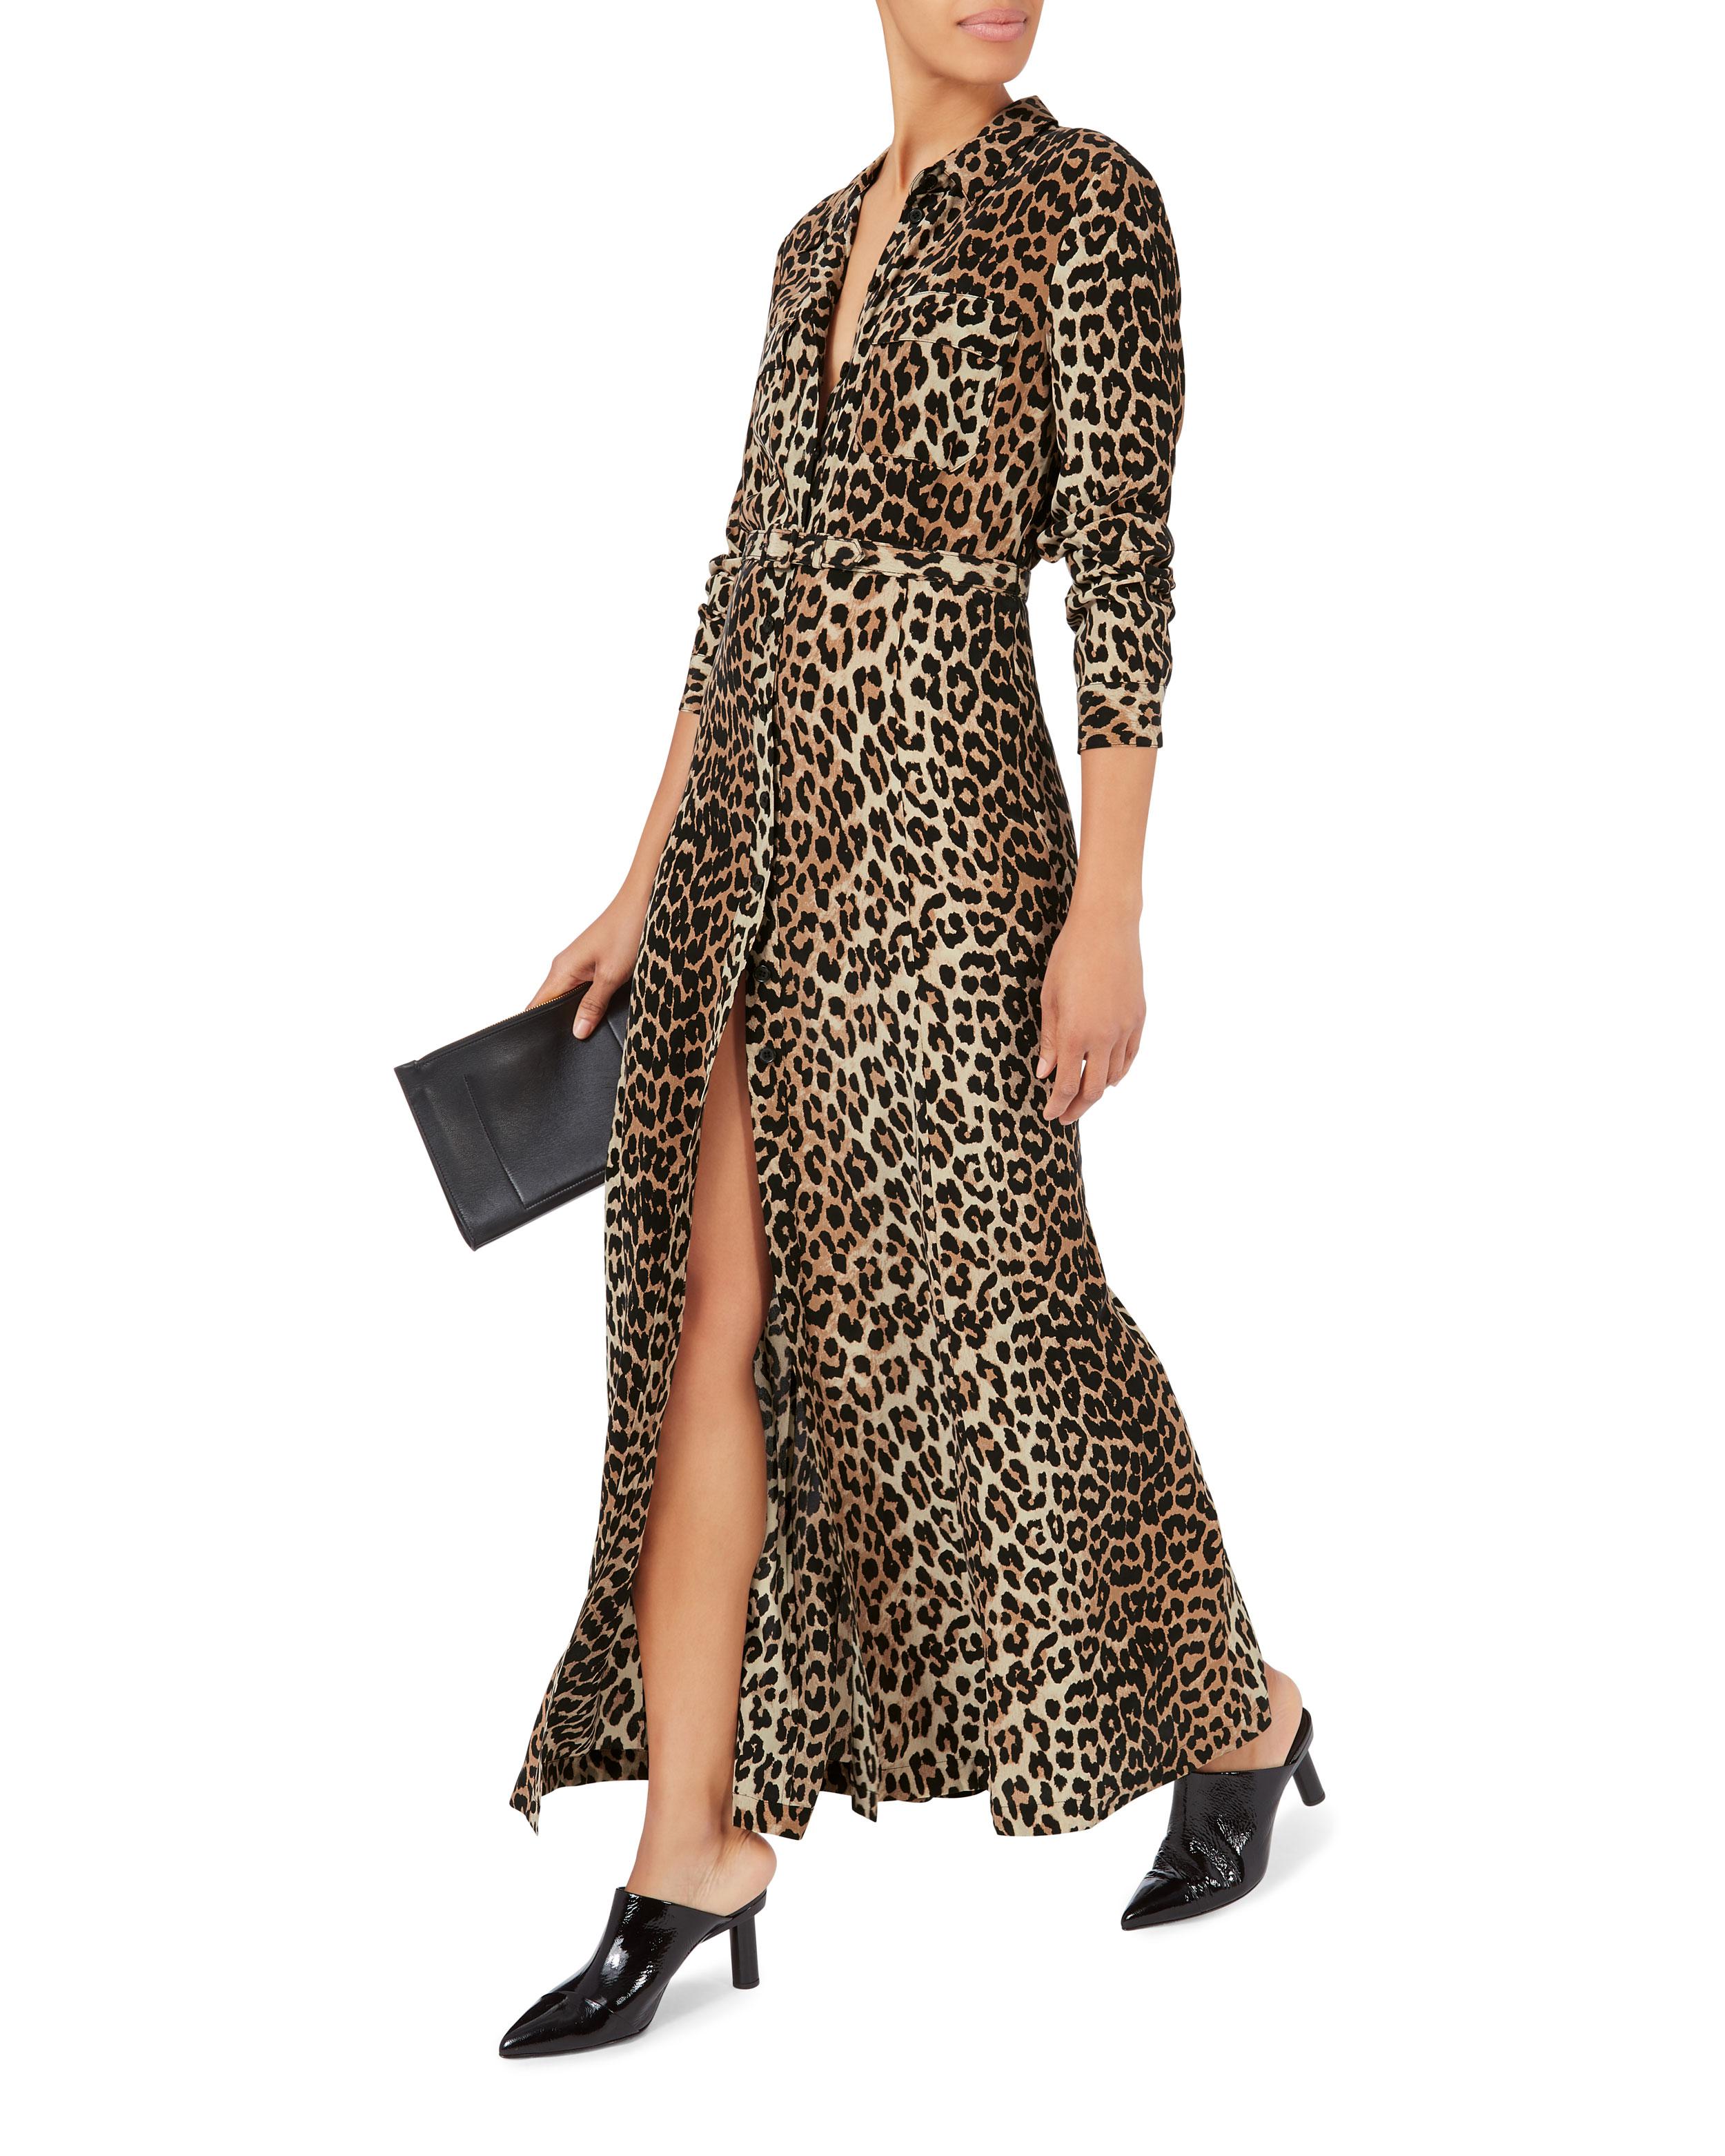 ganni dress leopard print wholesale f92b6 002de